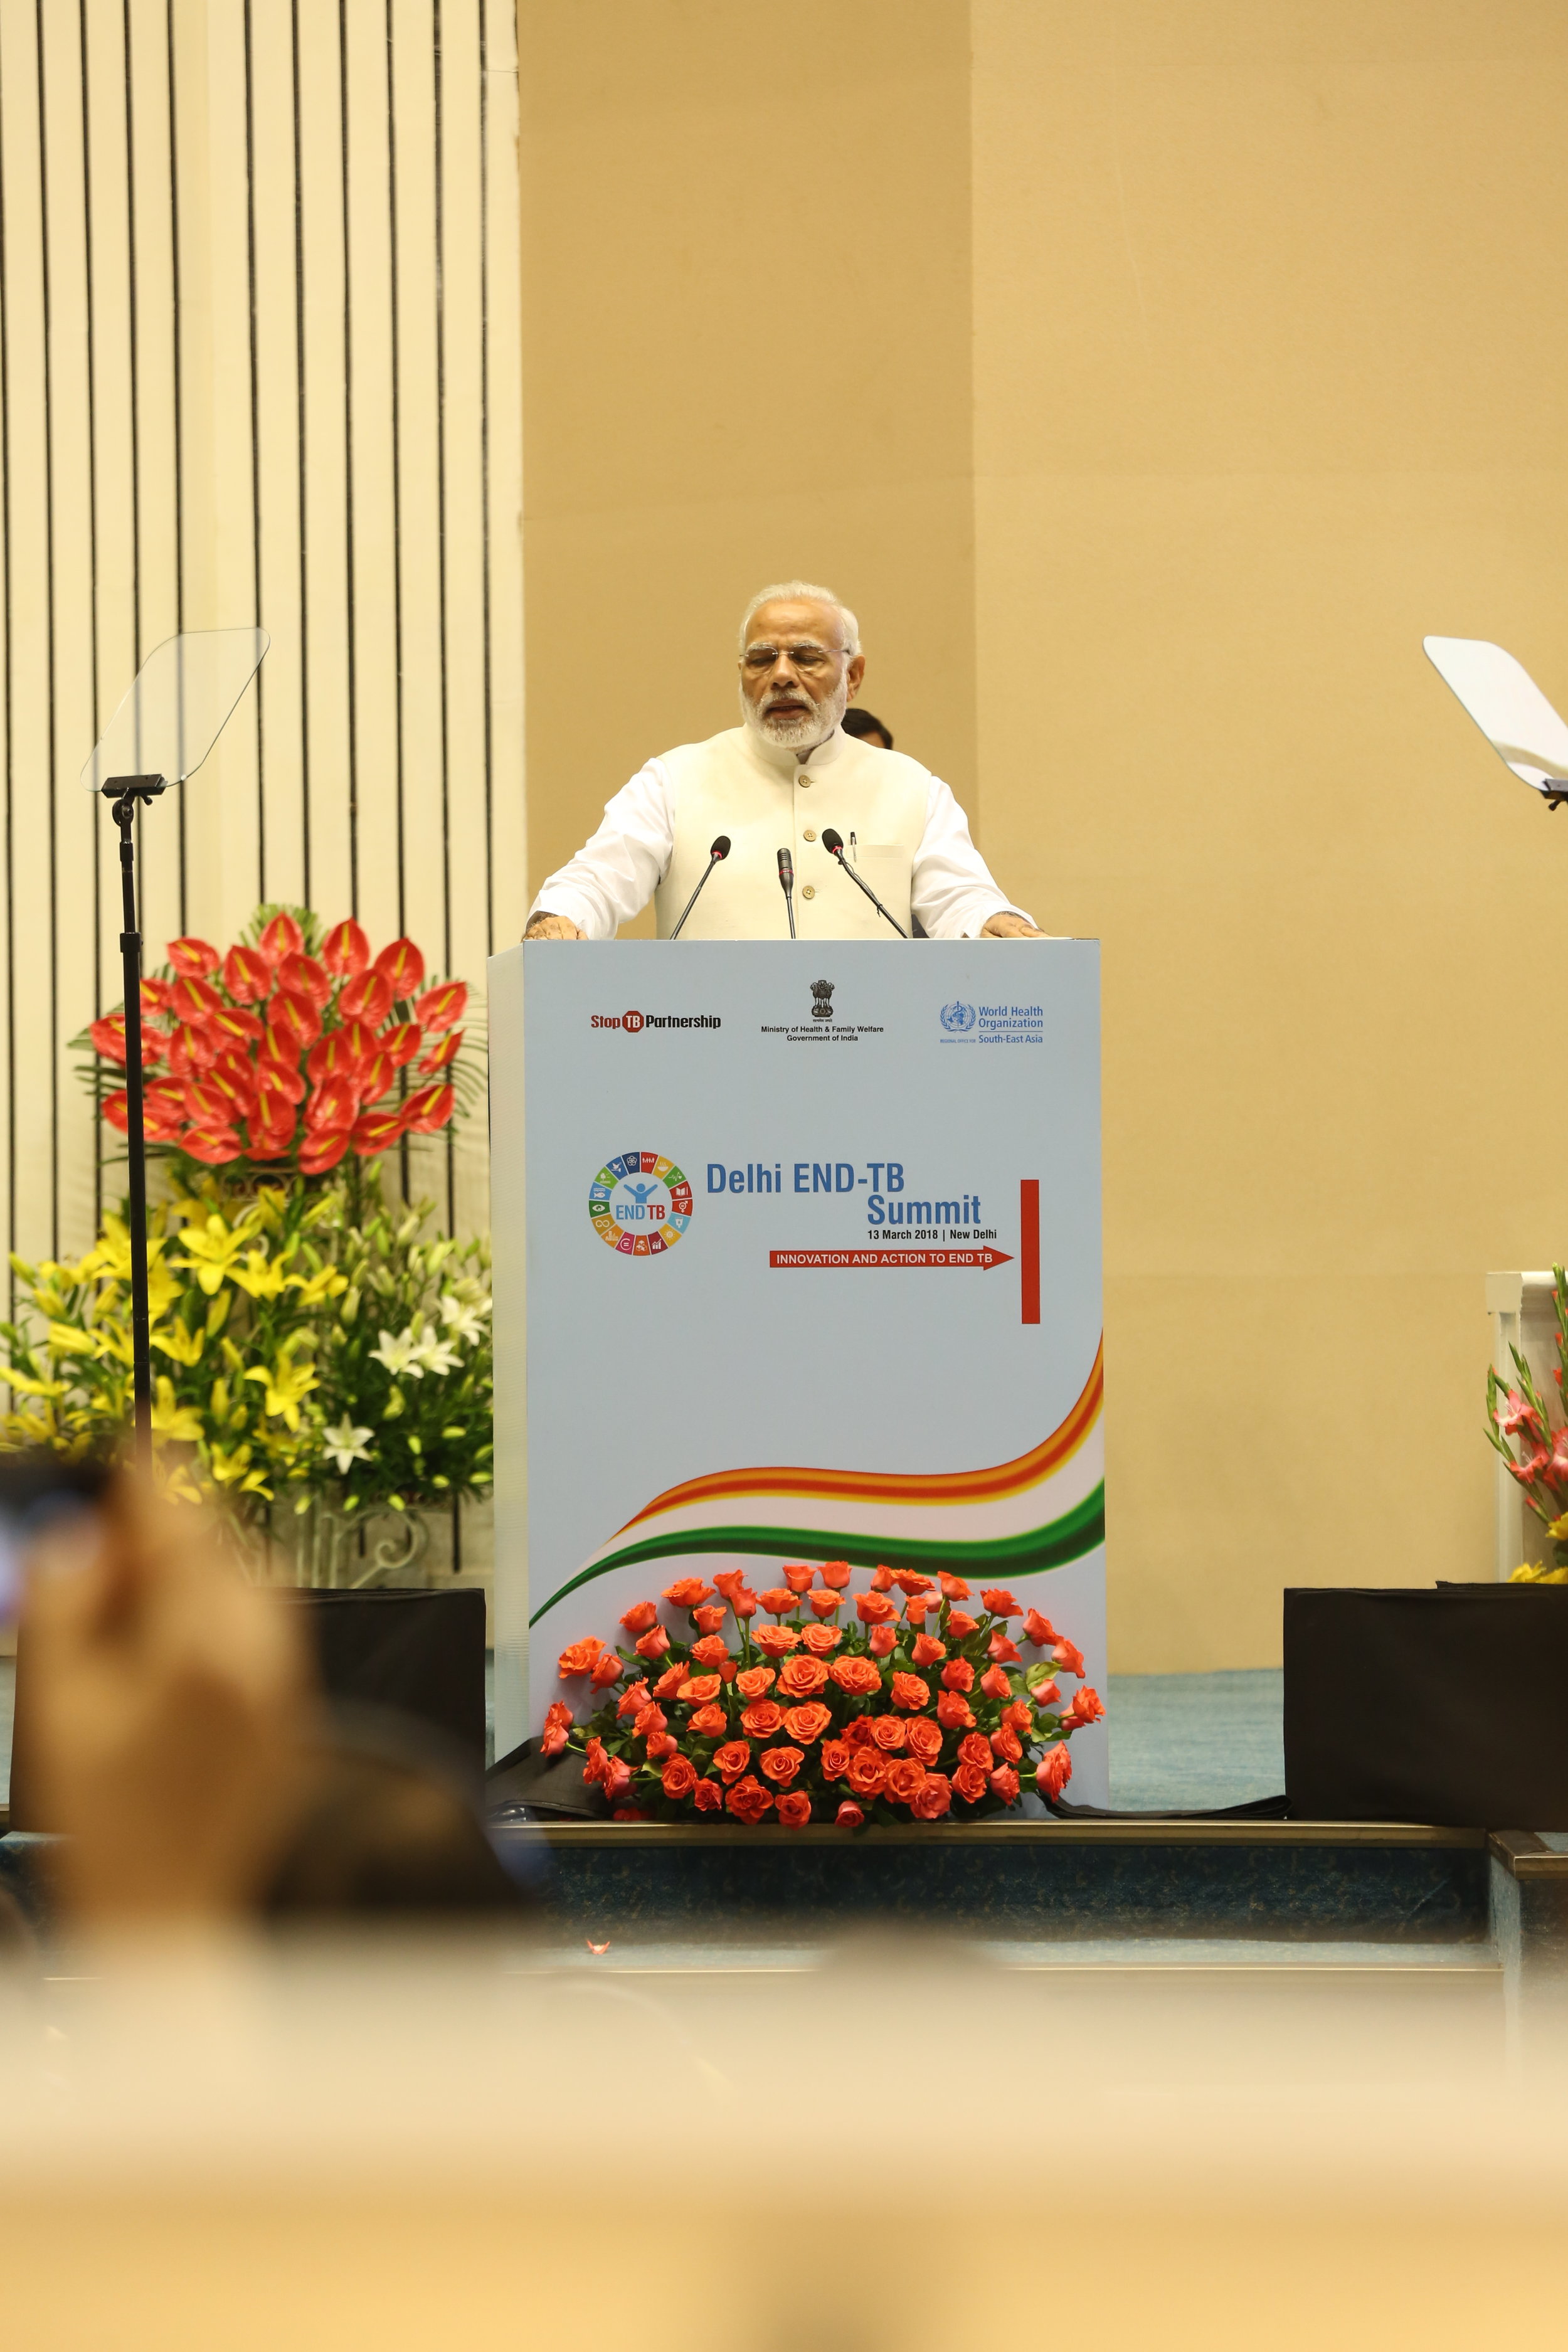 Inauguration of the ‘Delhi End-TB Summit’ by Hon’ble Prime Minister of India, Shri Narendra Modi